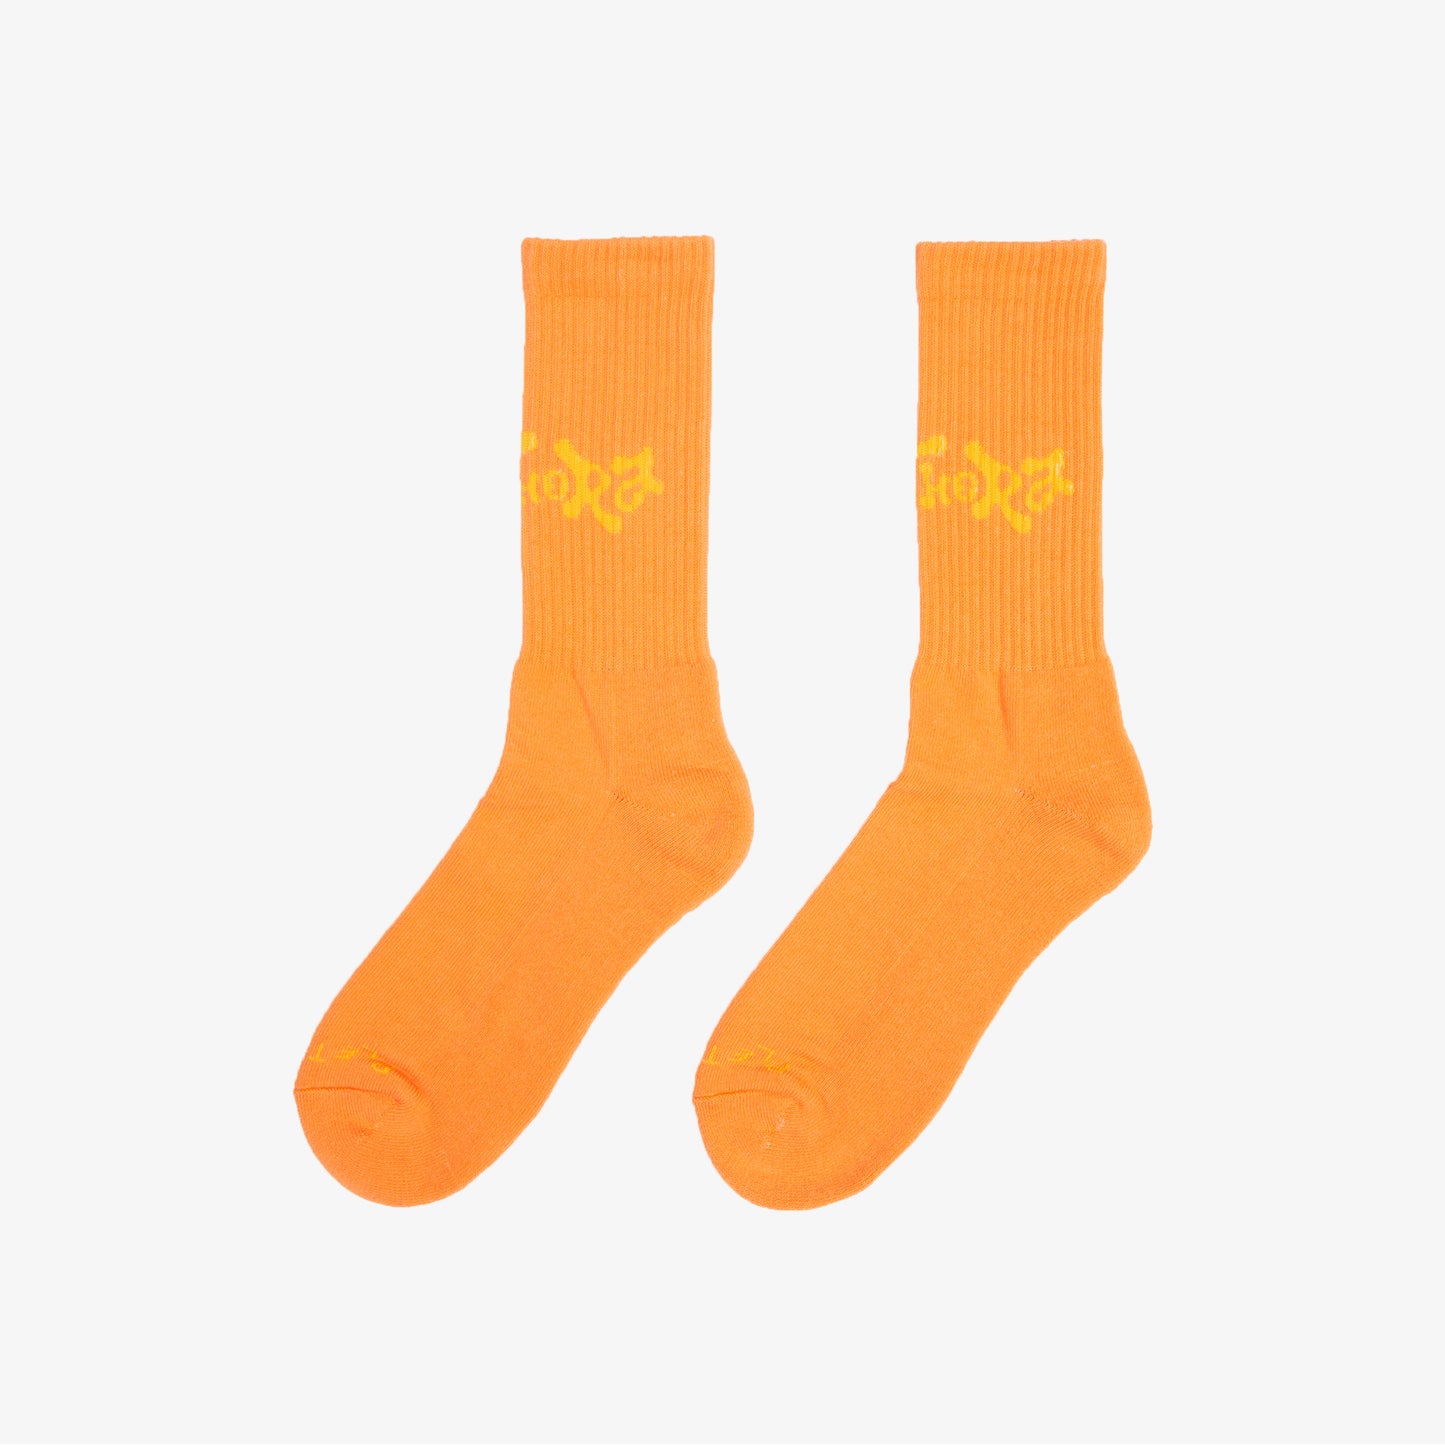 PLETHORA "Wave" Socks - Tangerine Dream